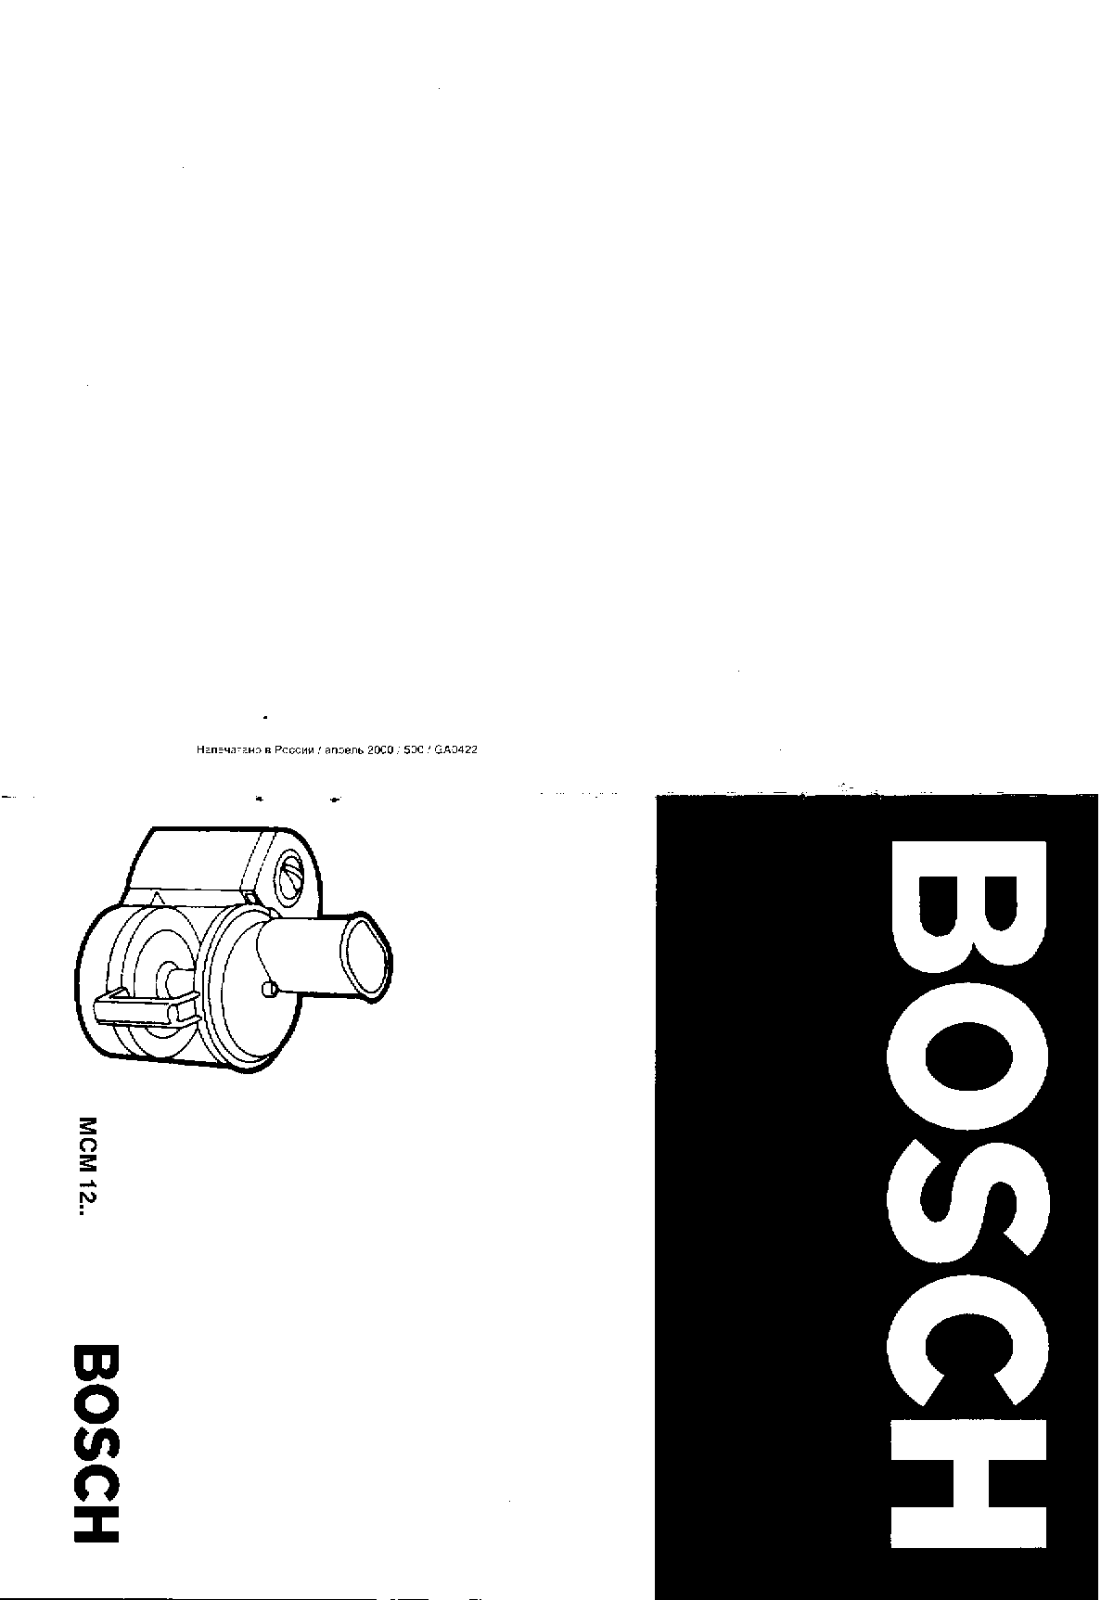 Bosch MCM-1200EU User Manual